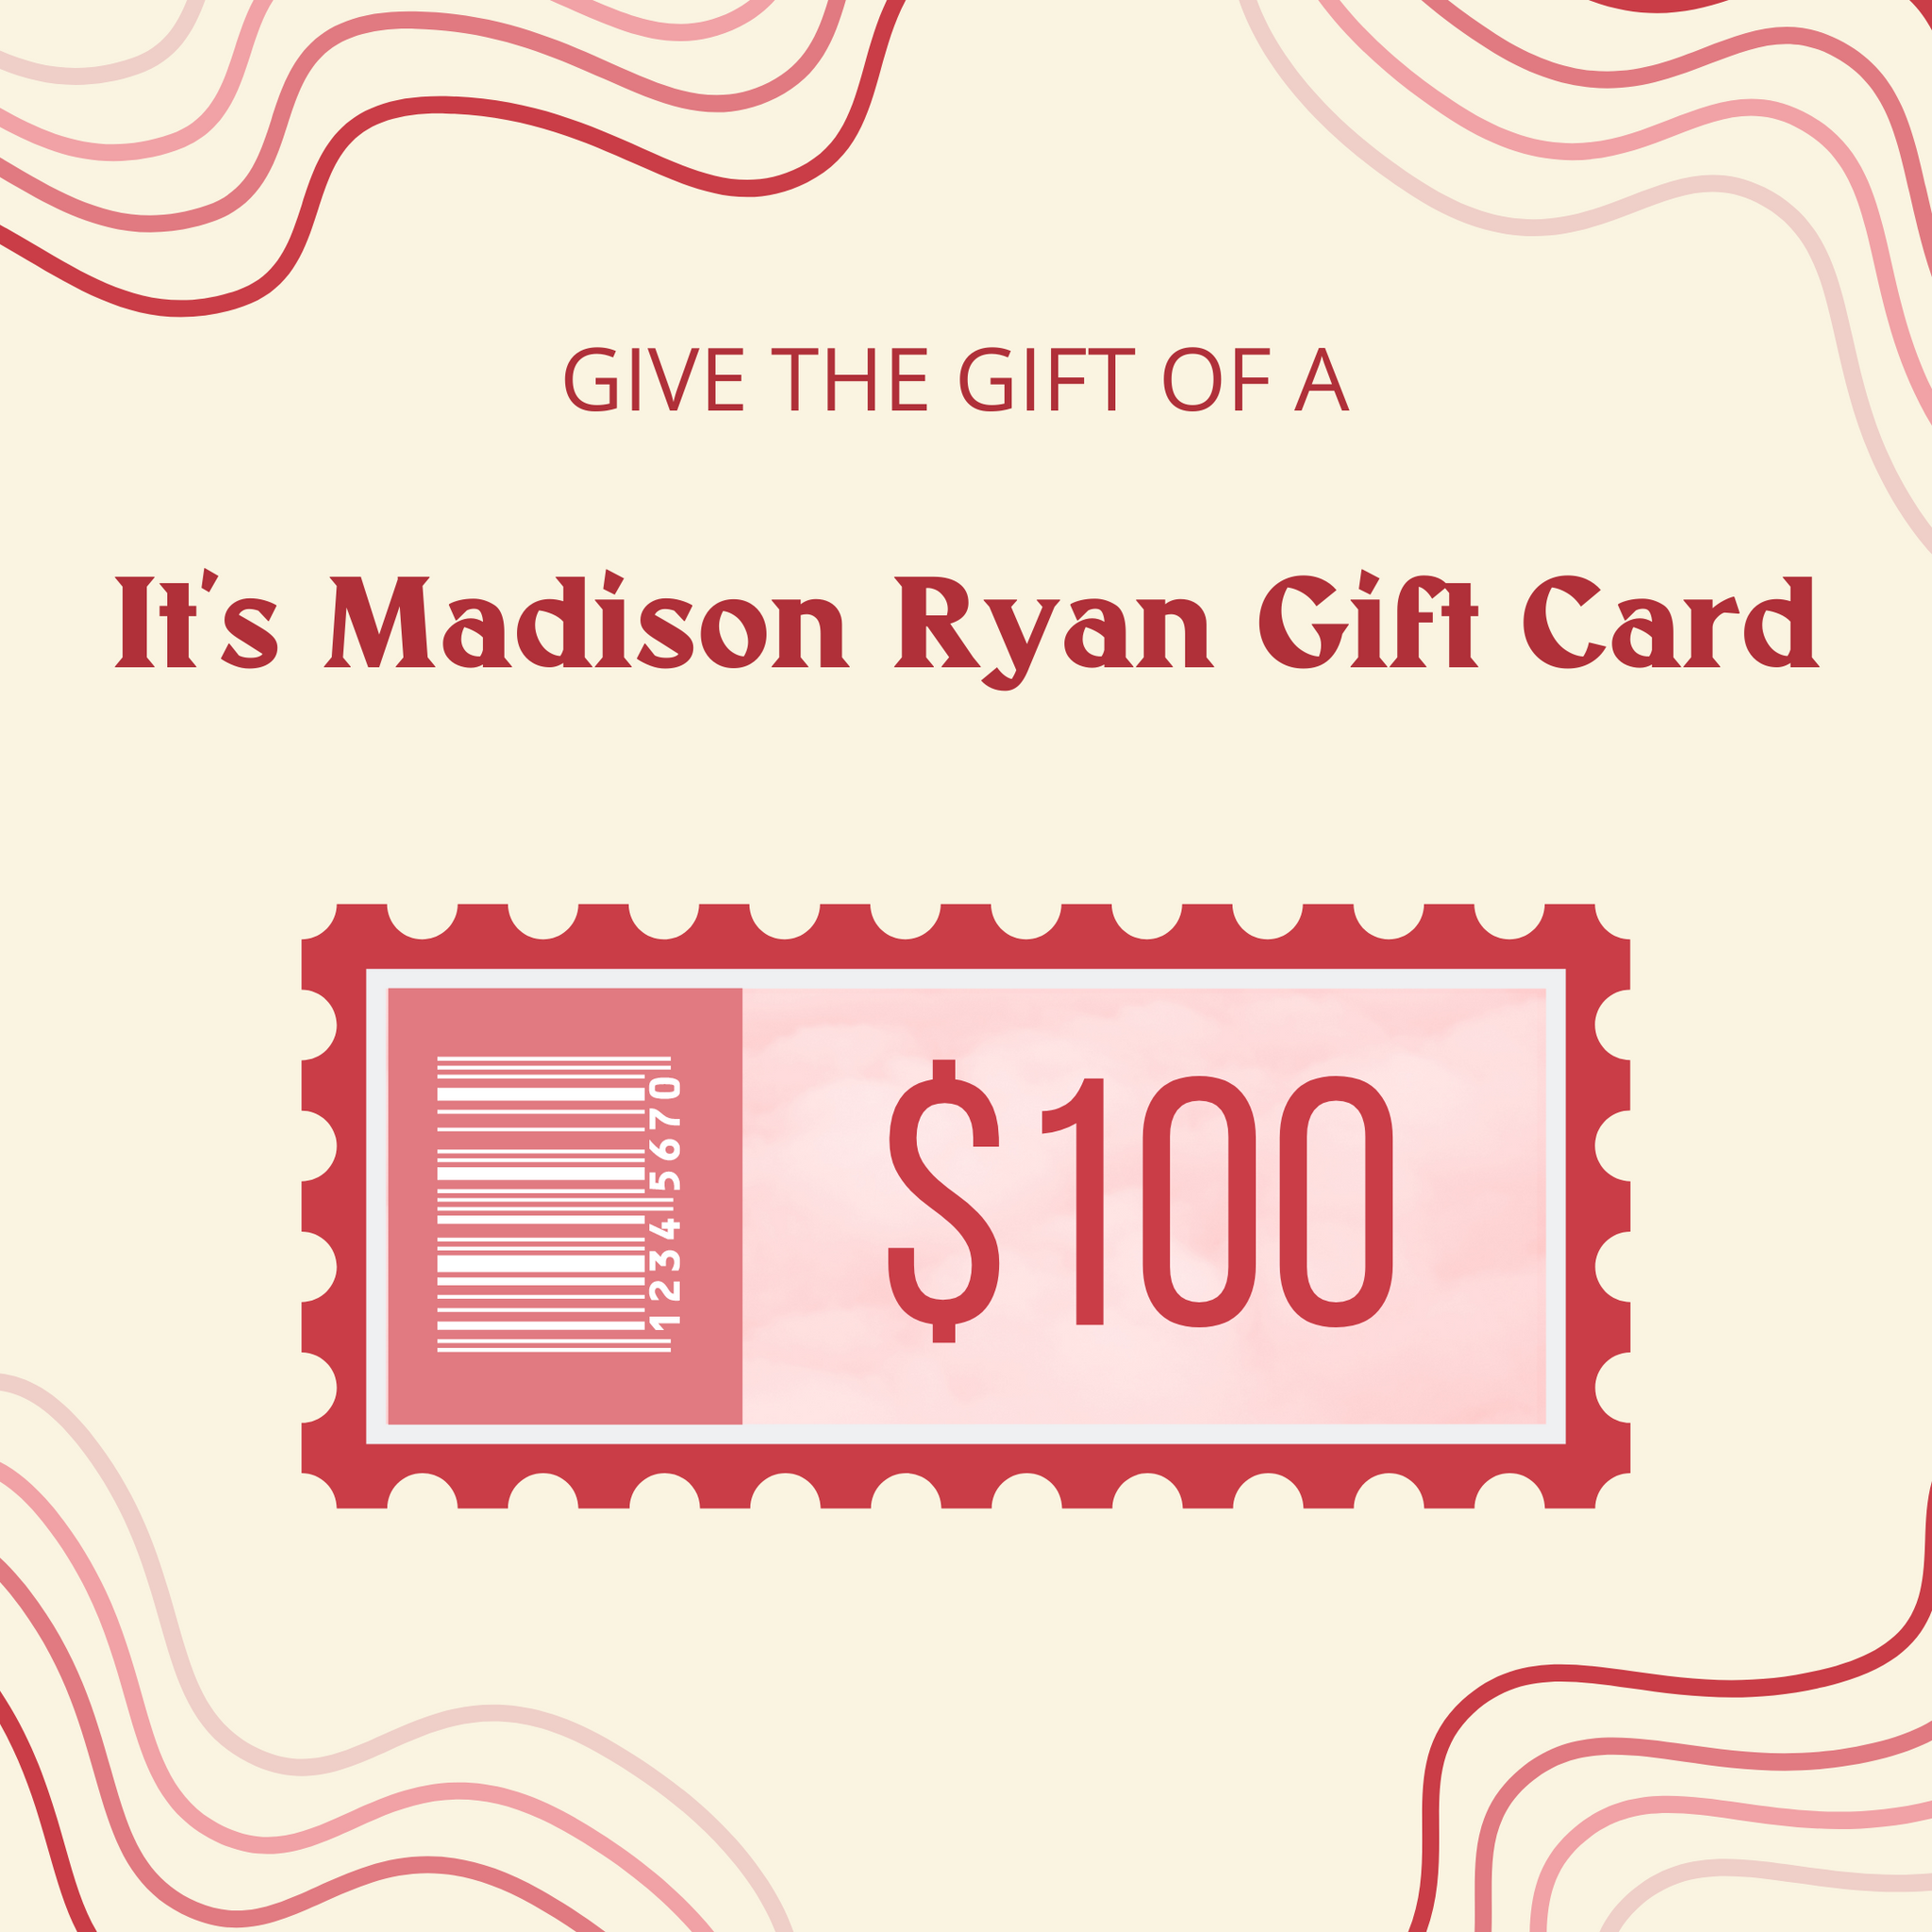 It's Madison Ryan Gift Card